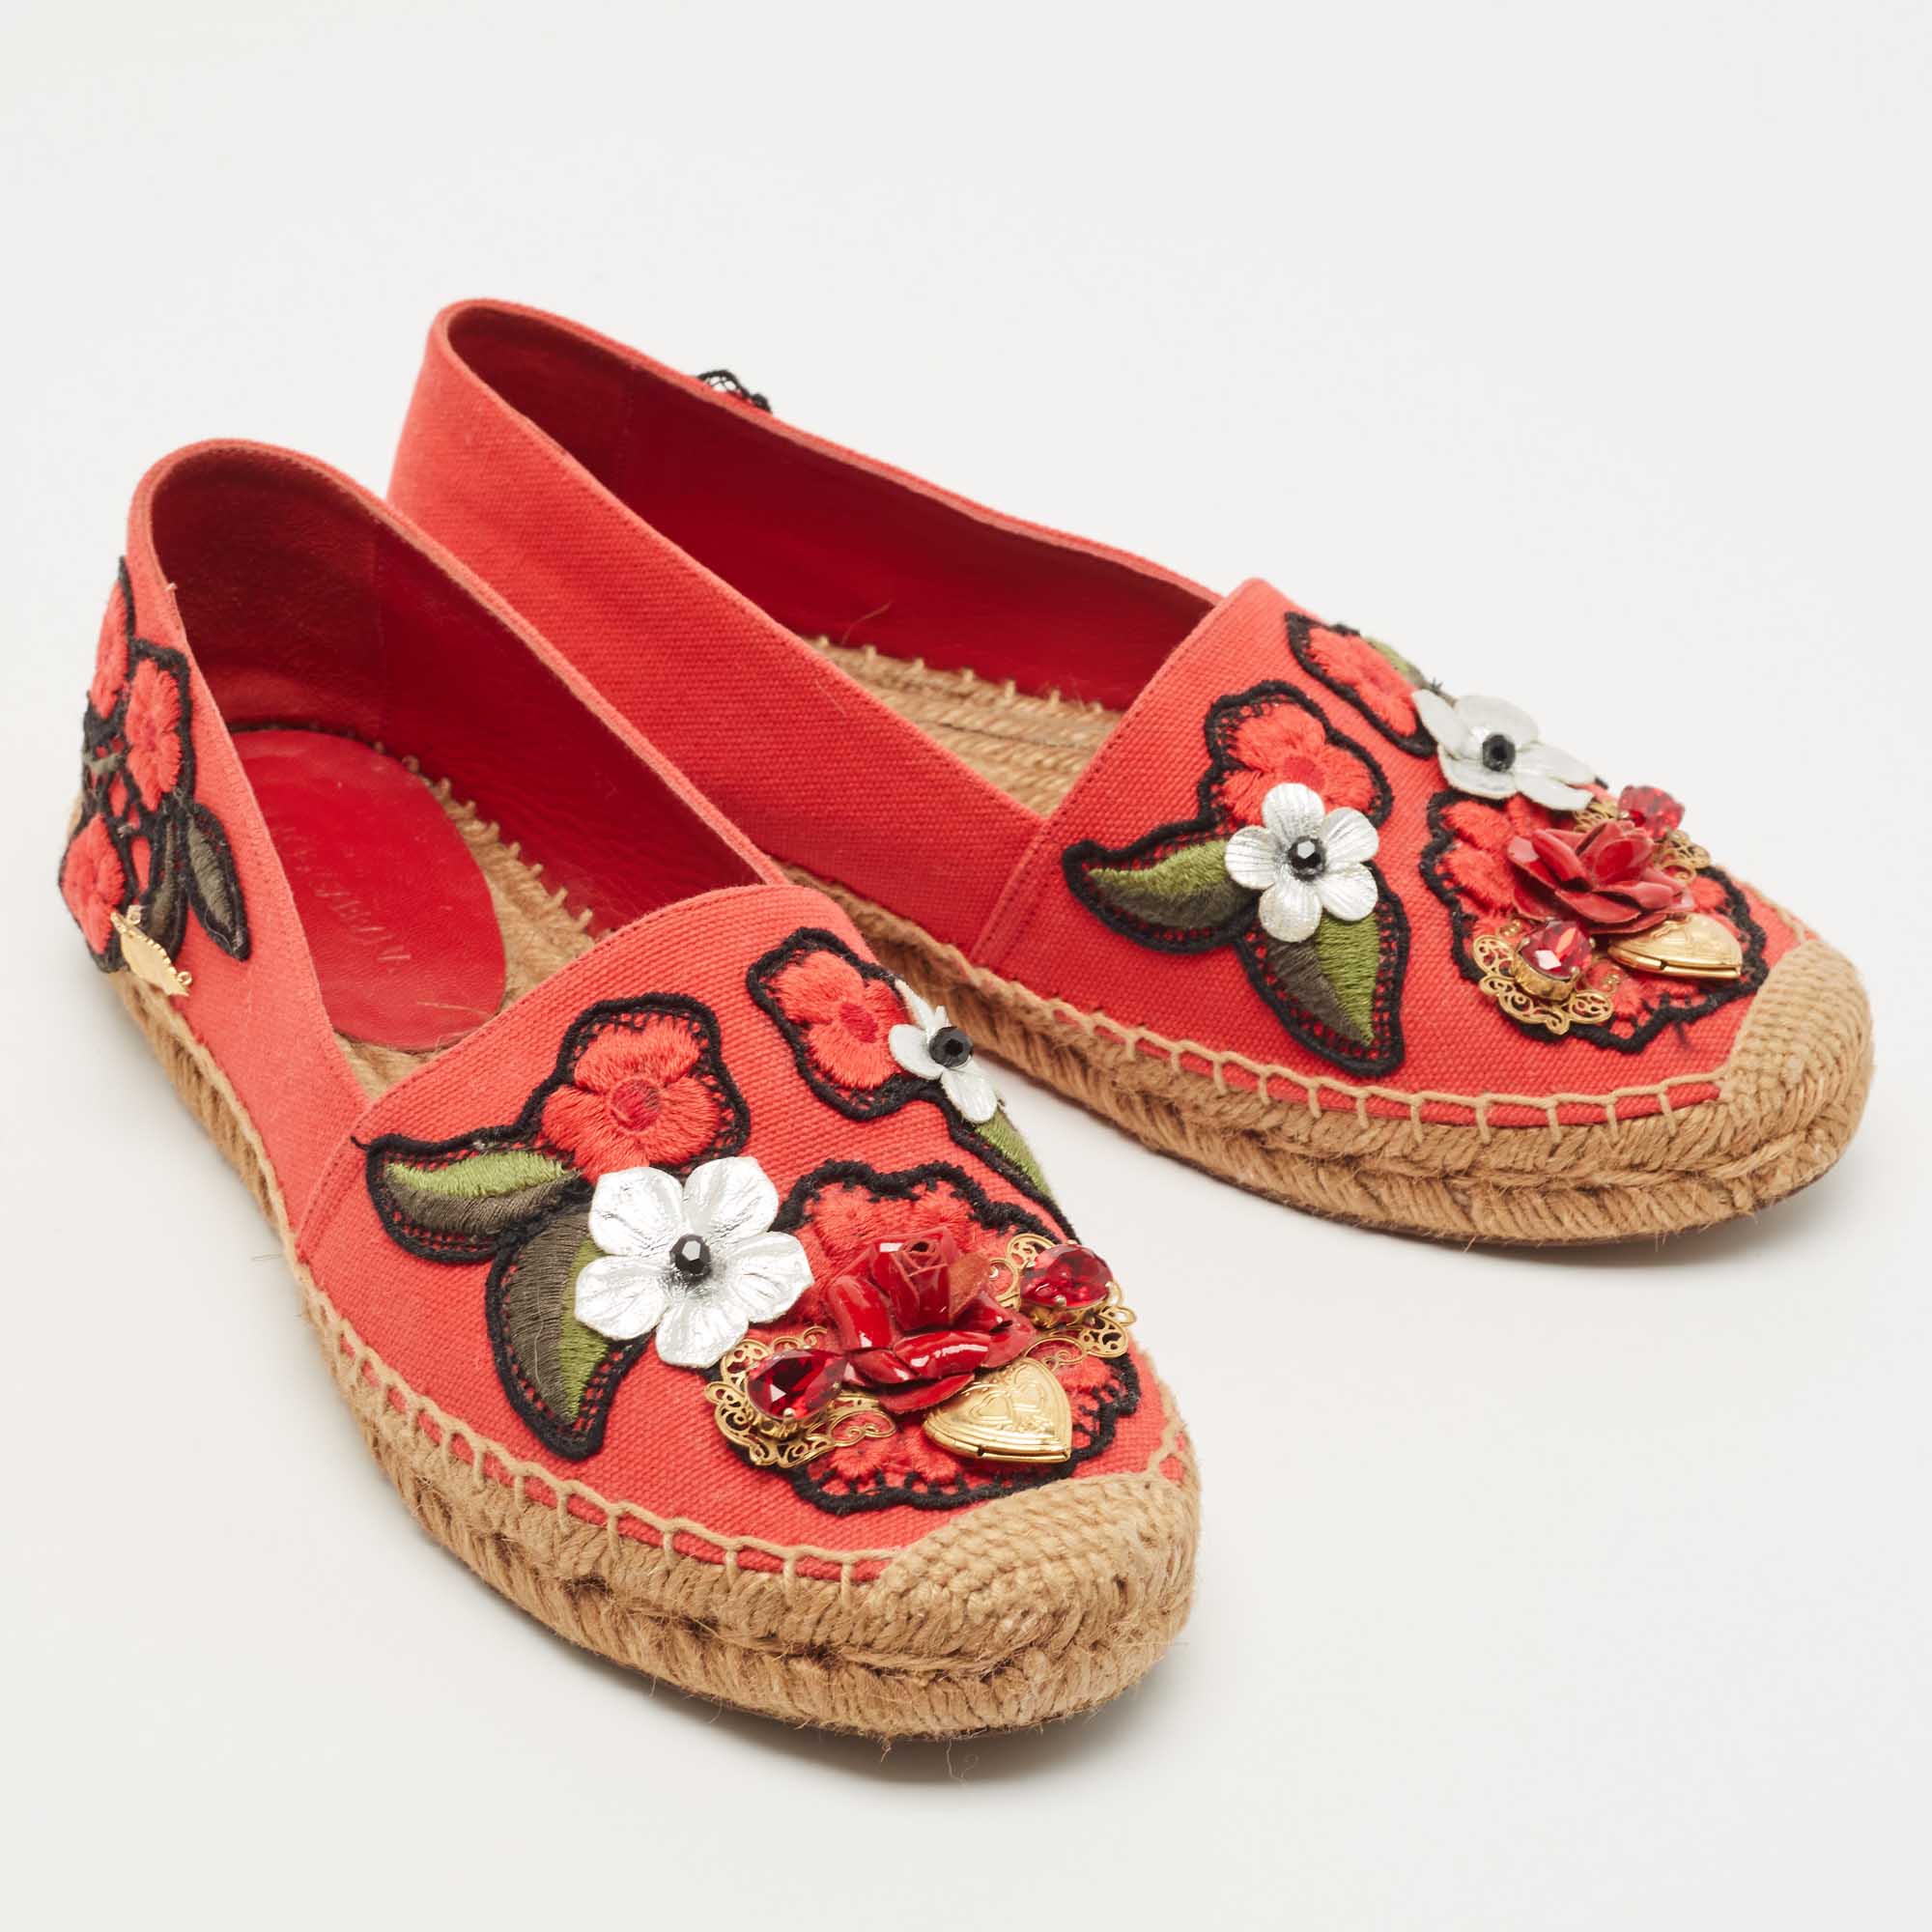 Dolce & Gabbana Red Canvas Locket Flower Jewel Embroidered Espadrilles Flats Size 37